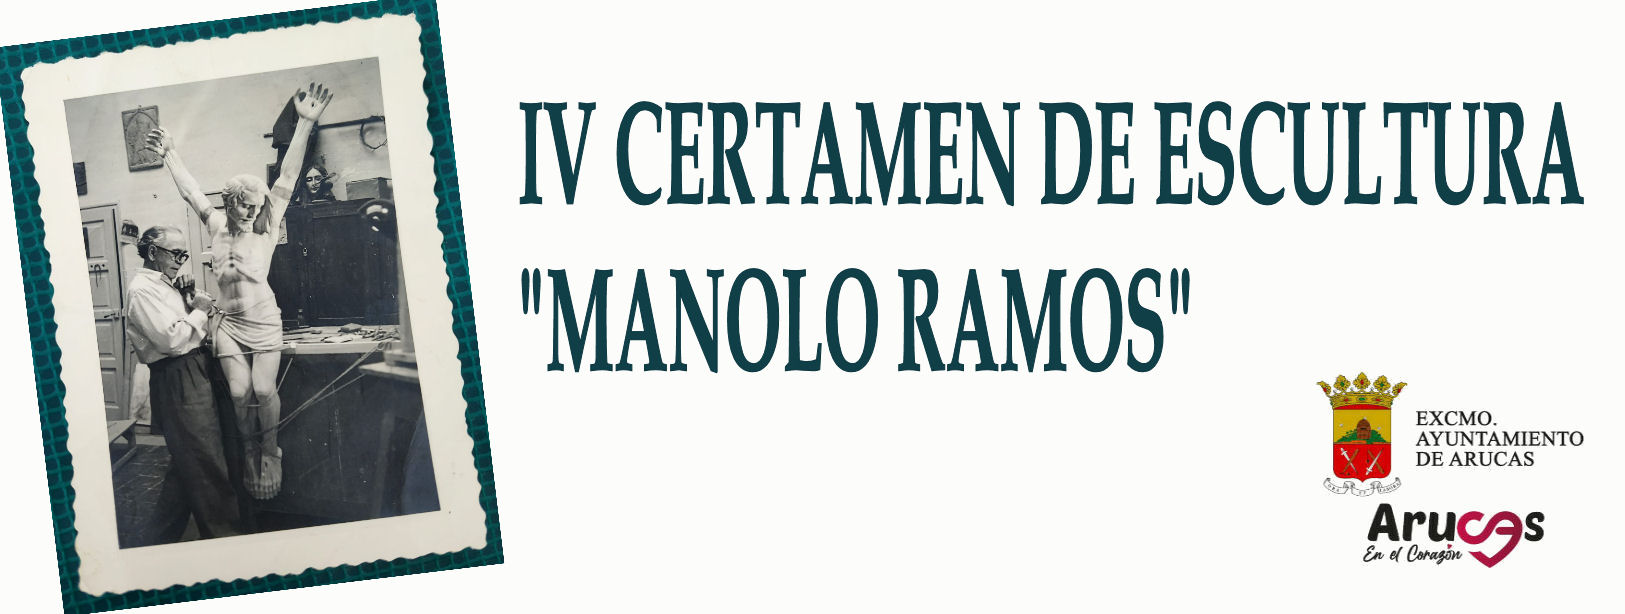 IV CERTAMEN DE ESCULTURA MANOLO RAMOS